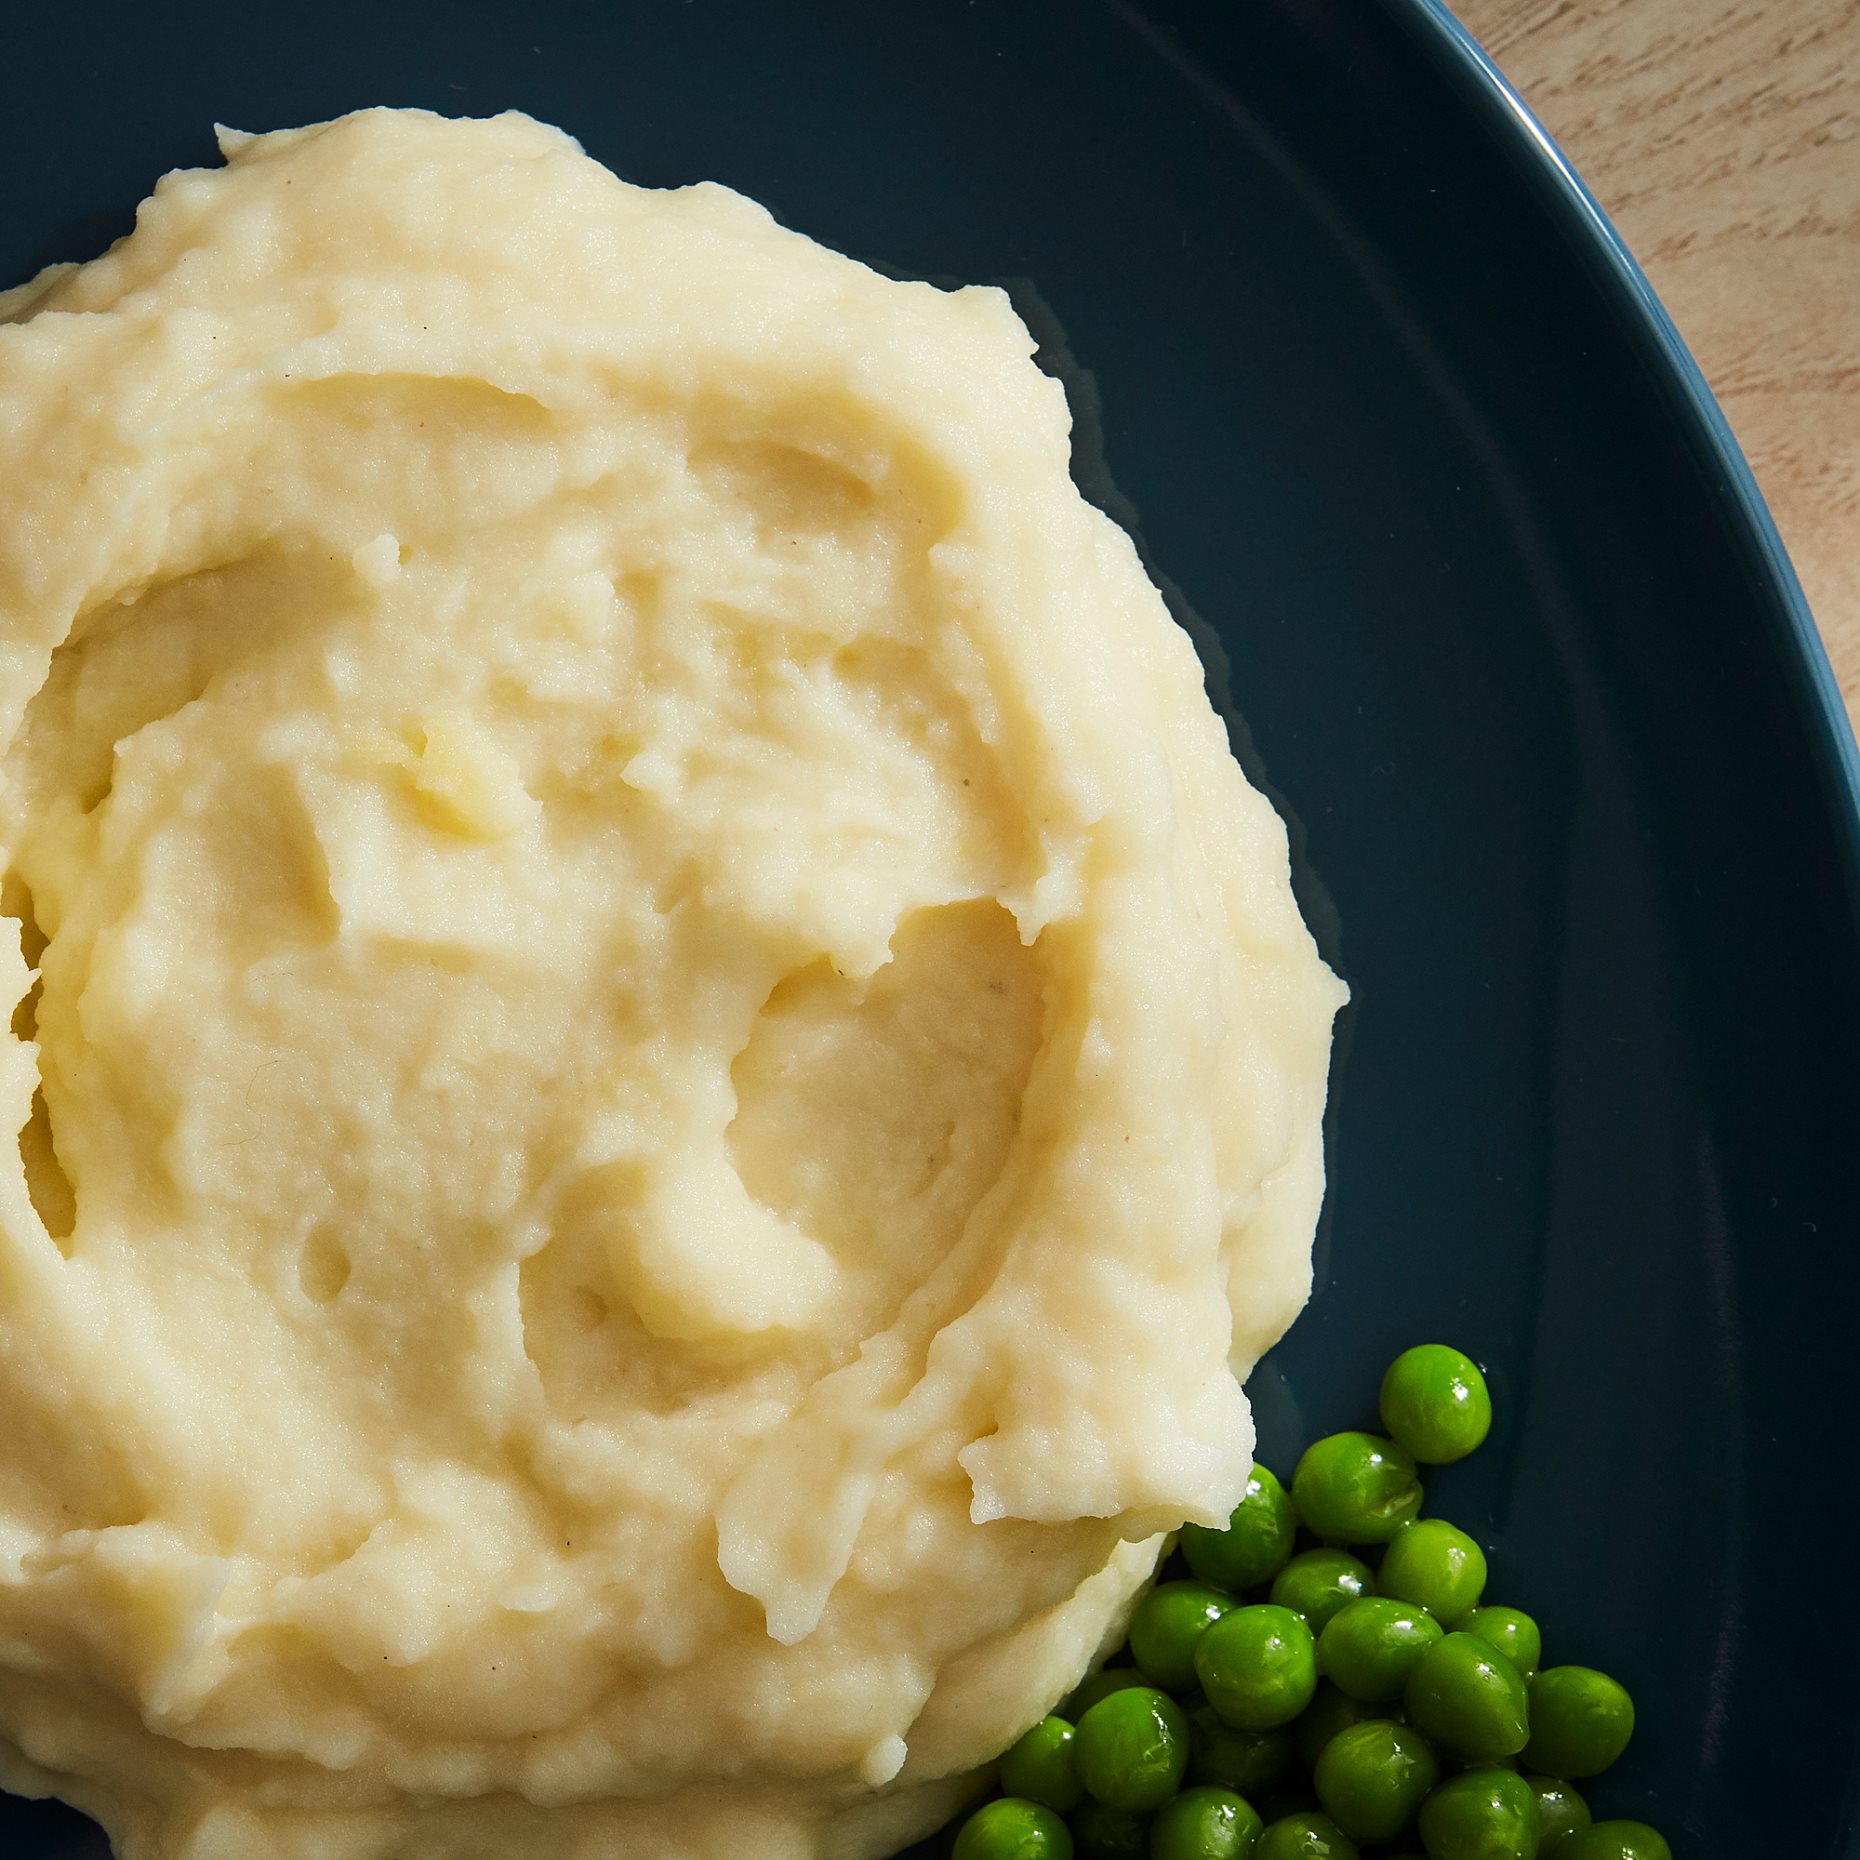 ALLEMANSRATTEN, mashed potatoes frozen, 600 g, 303.512.80